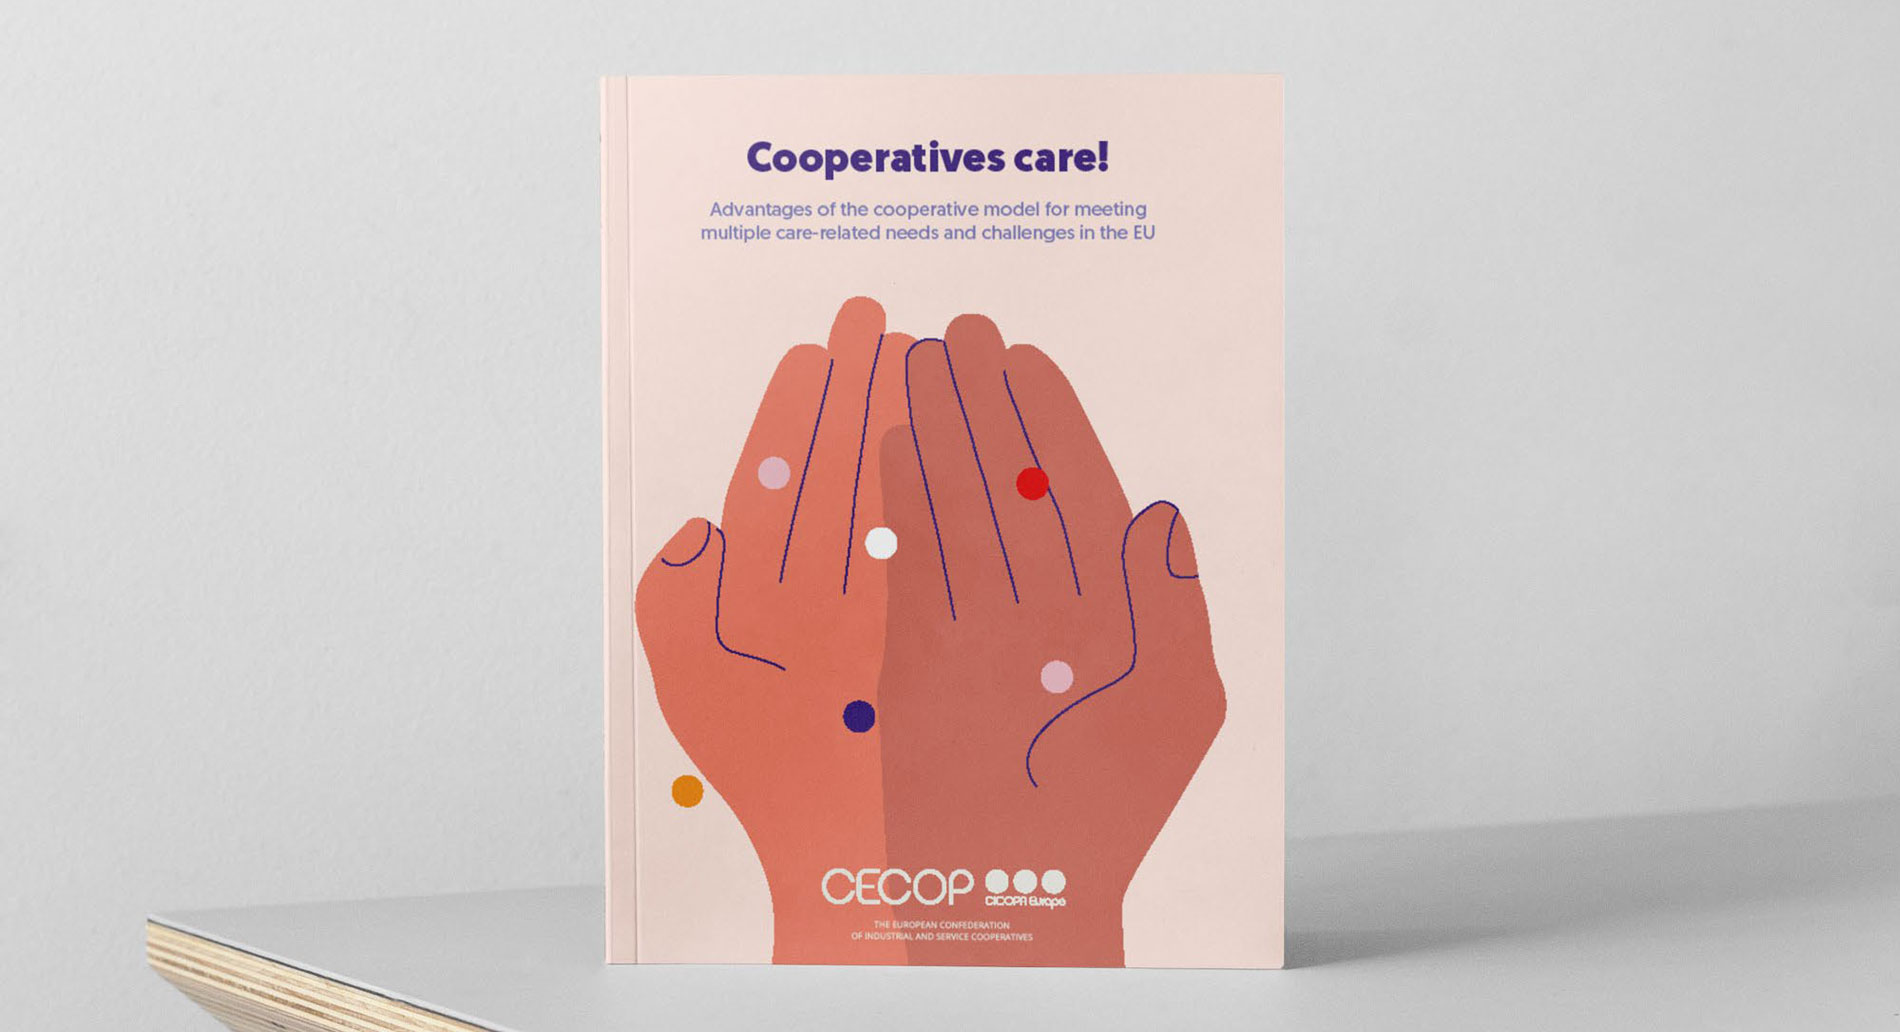 CECOP by Colectivo Verbena - Creative Work